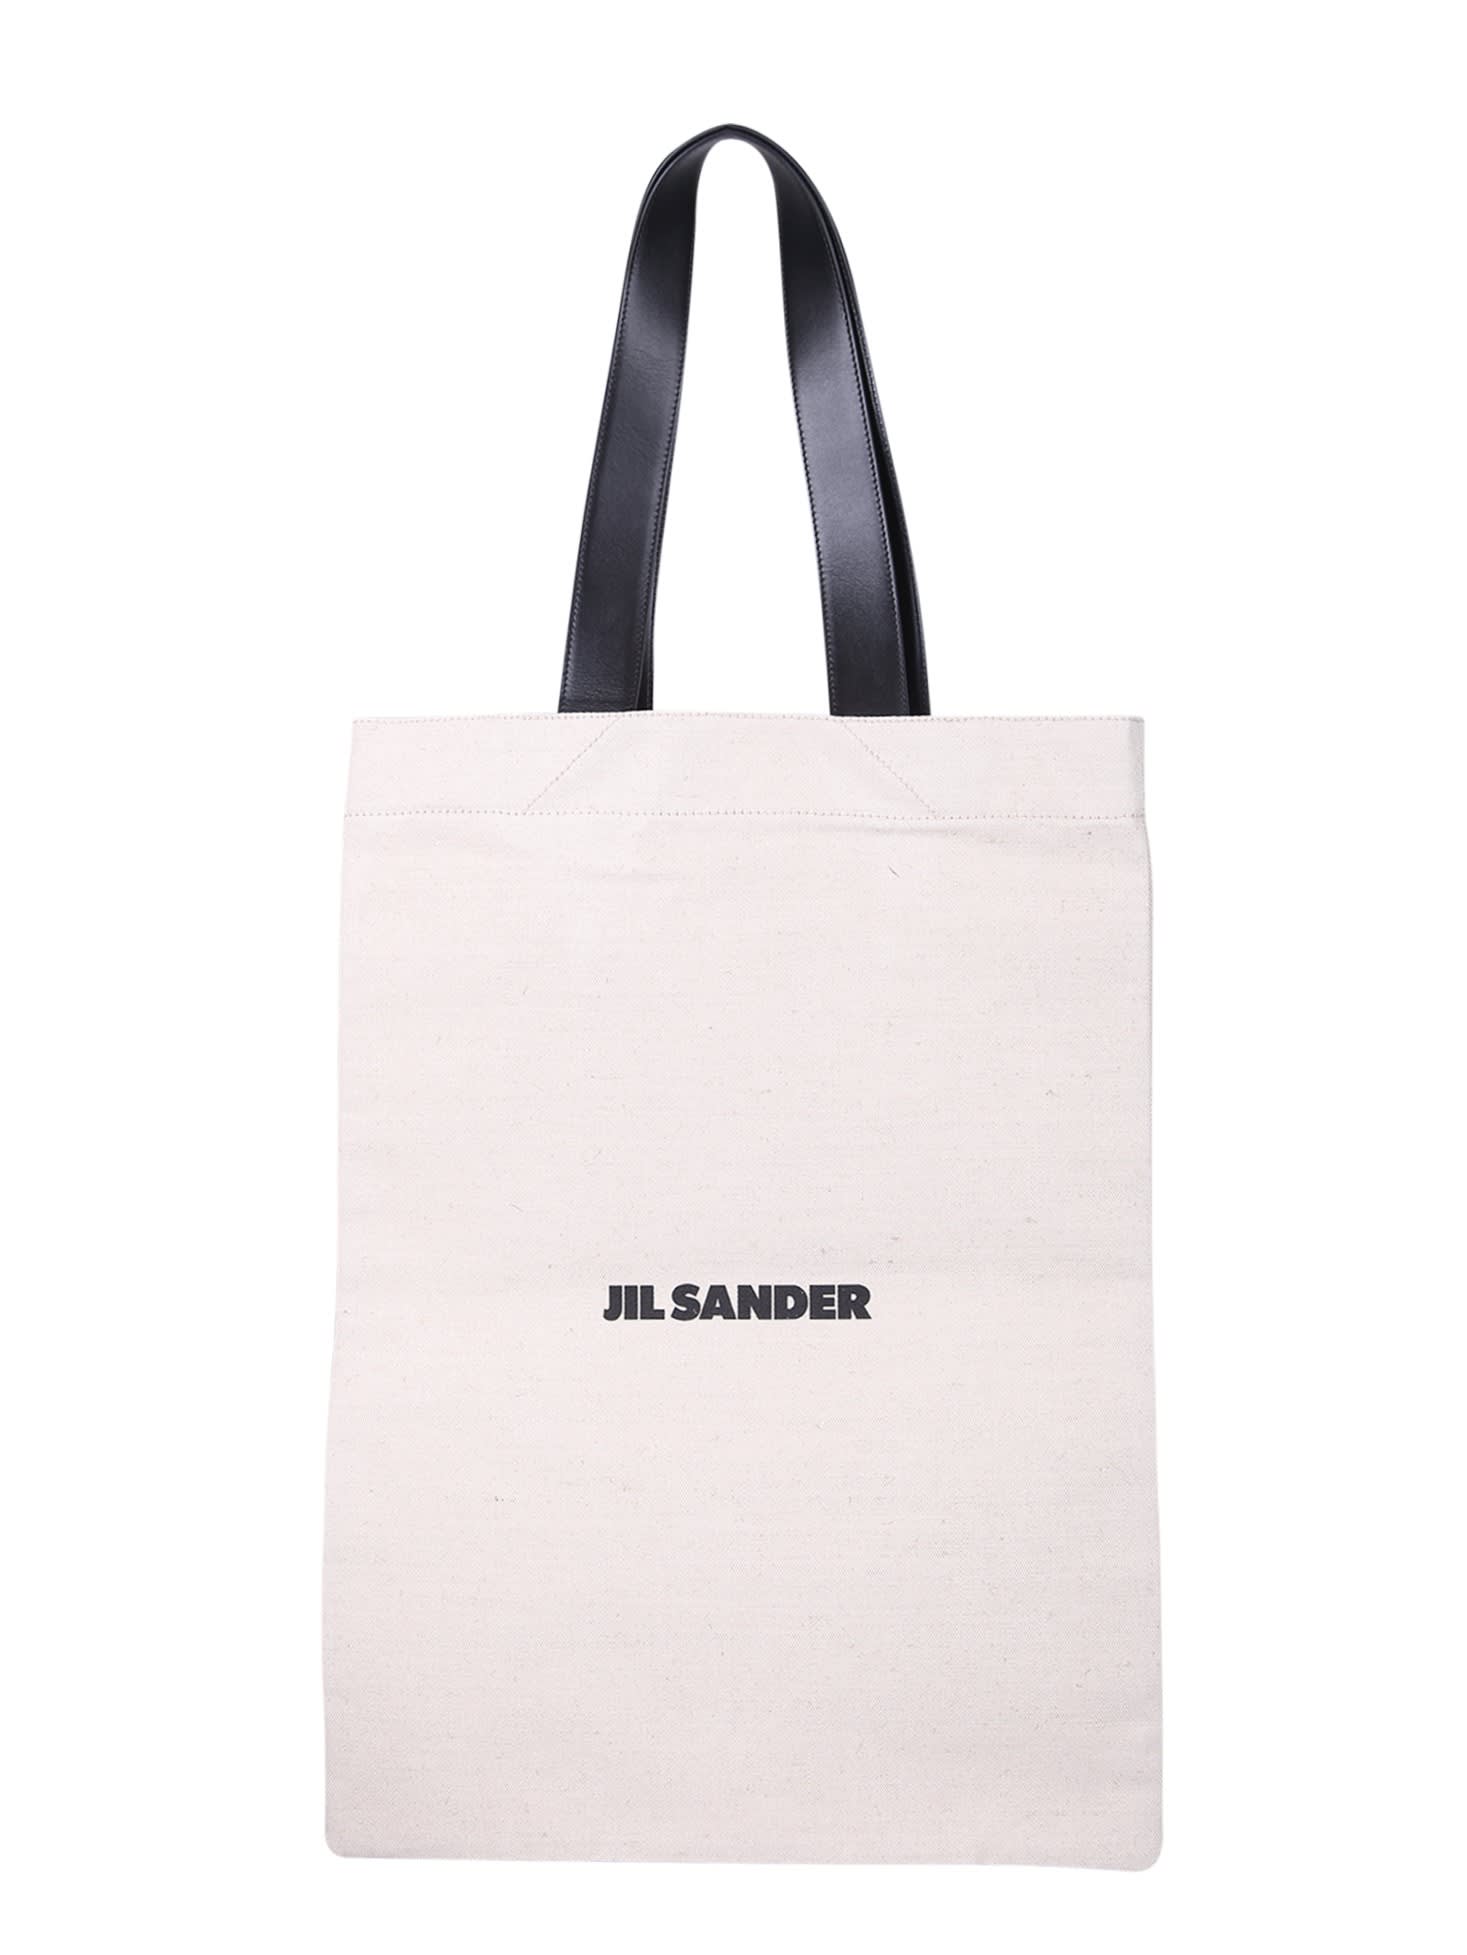 Jil Sander Branded Bag